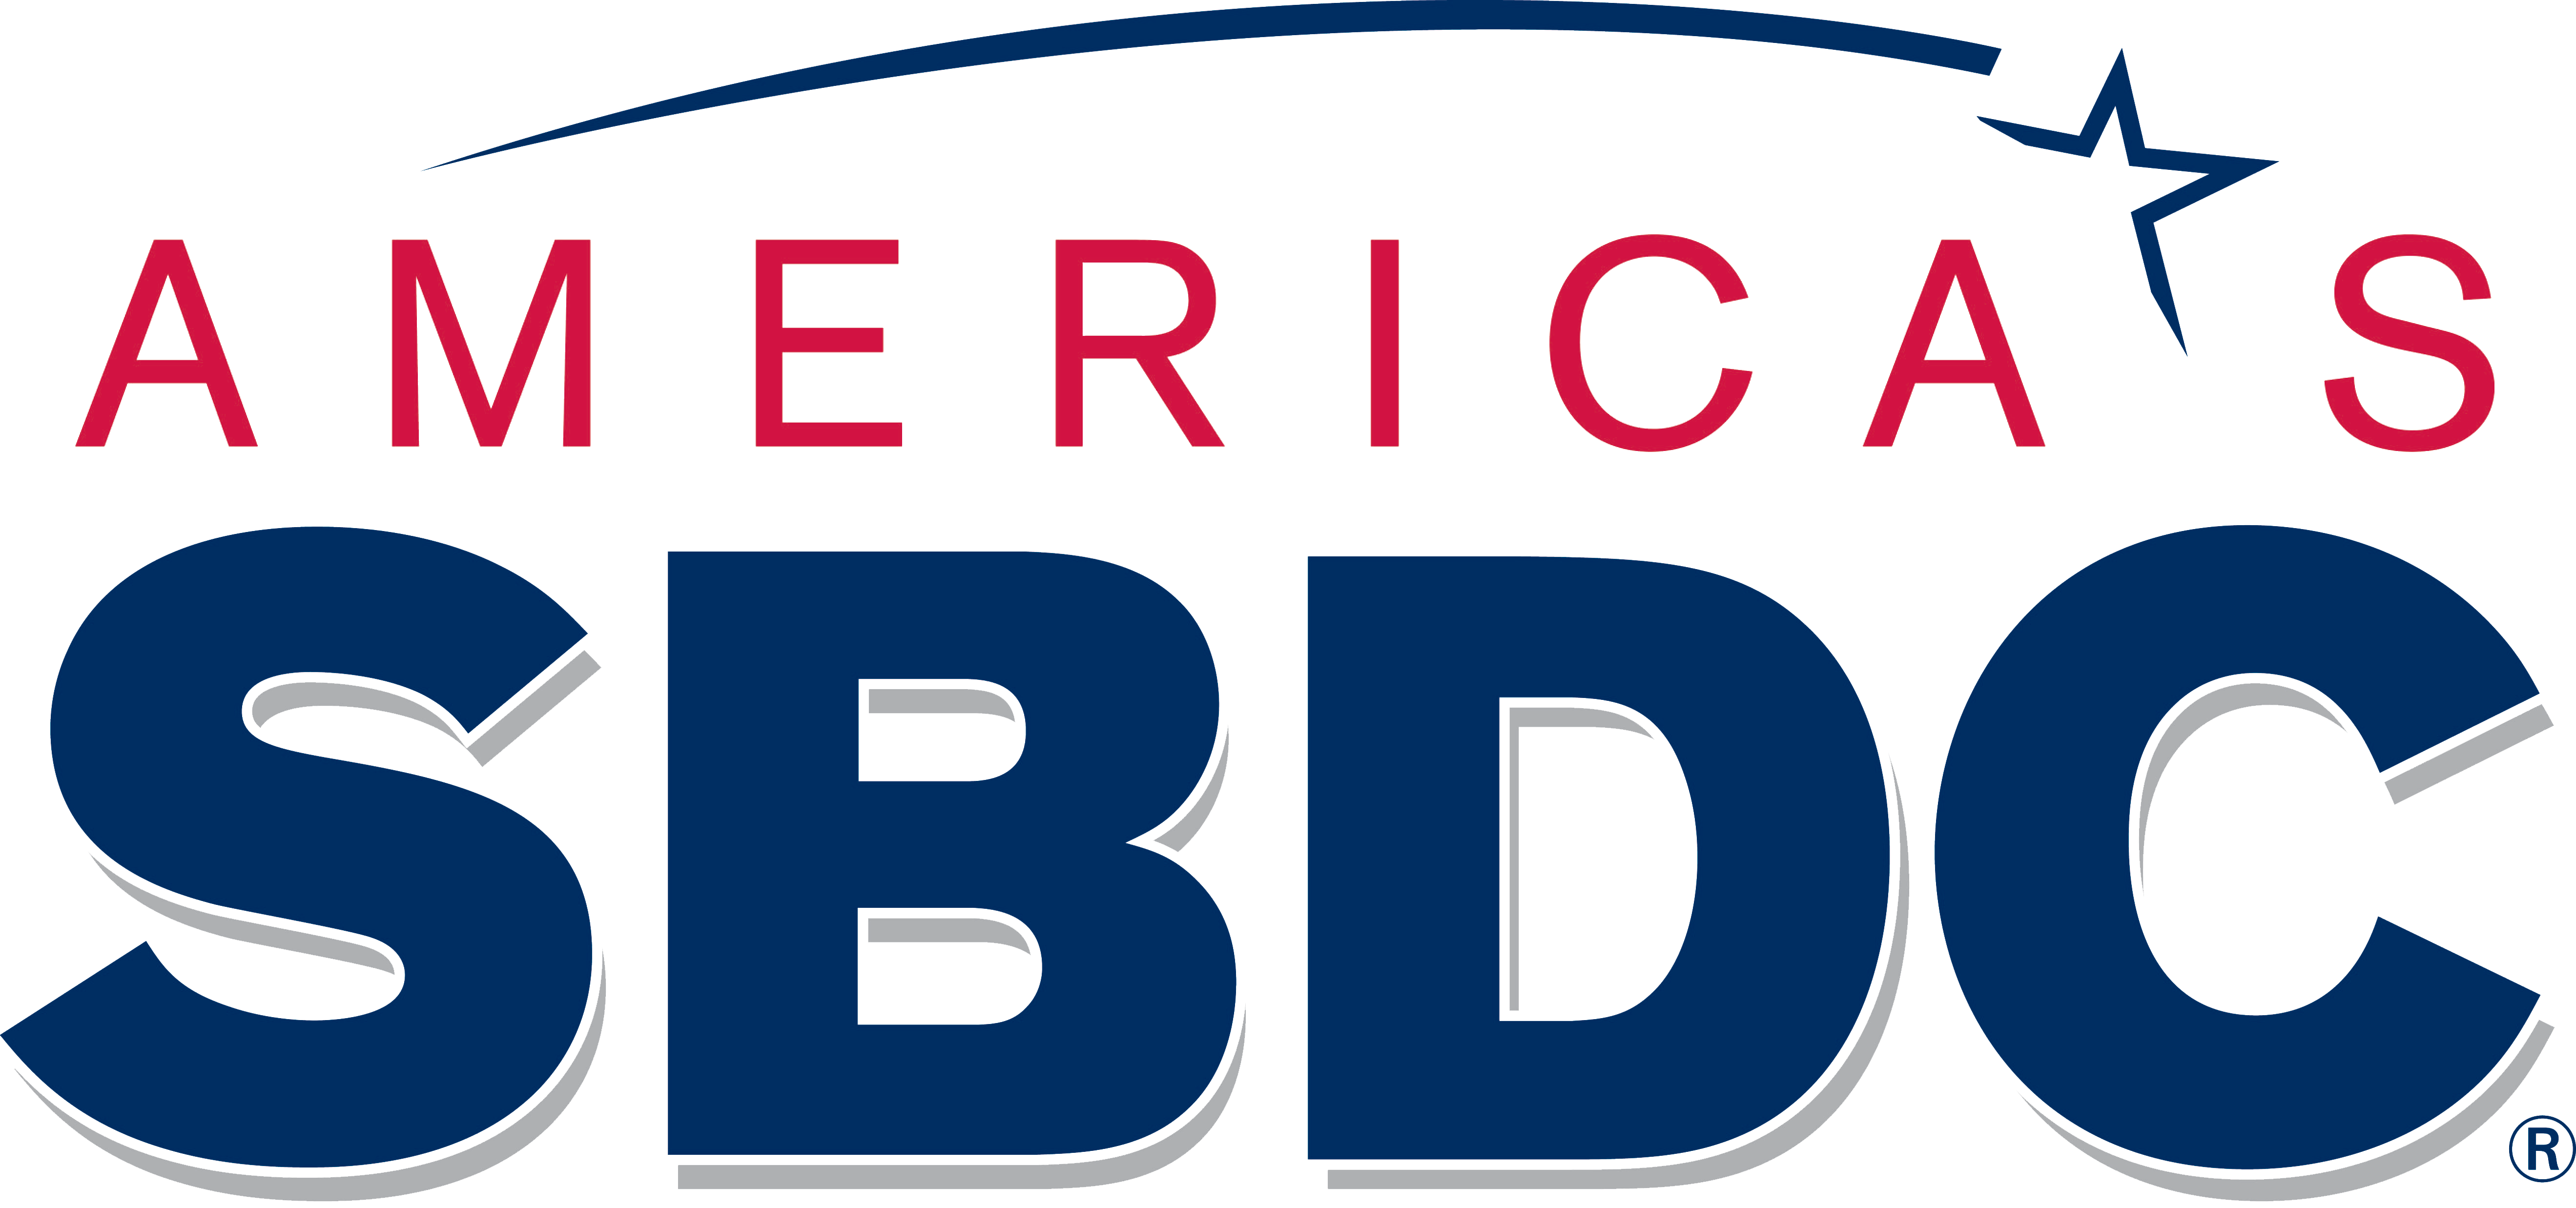 small business development center logo